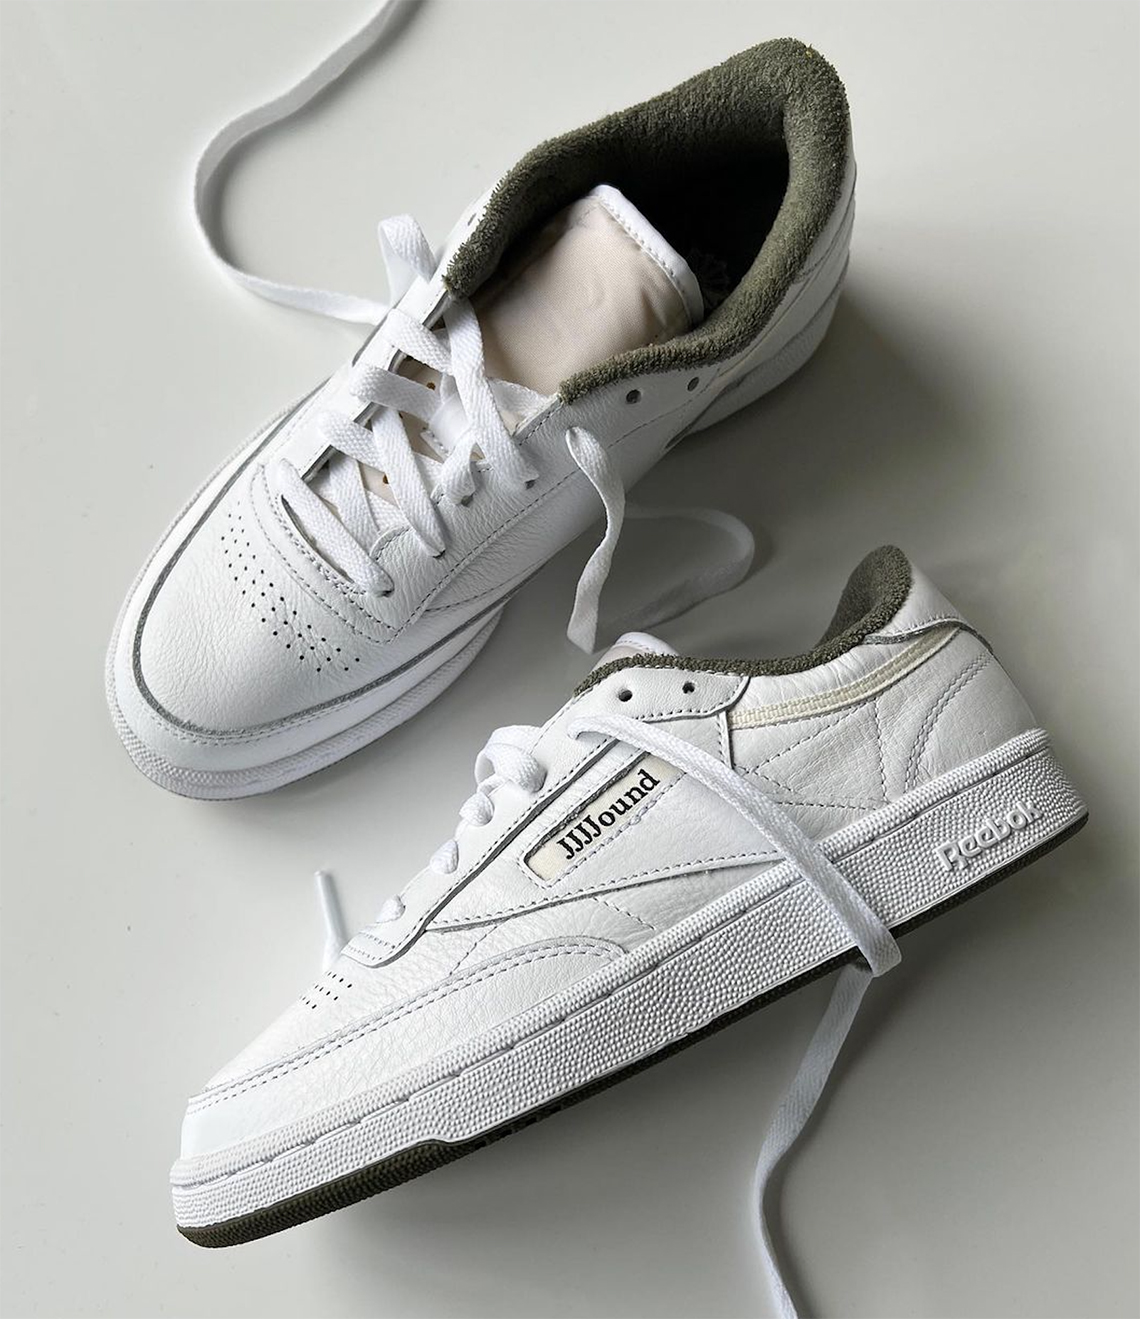 JJJJound x Reebok Club "White/Olive" Release Sneaker News